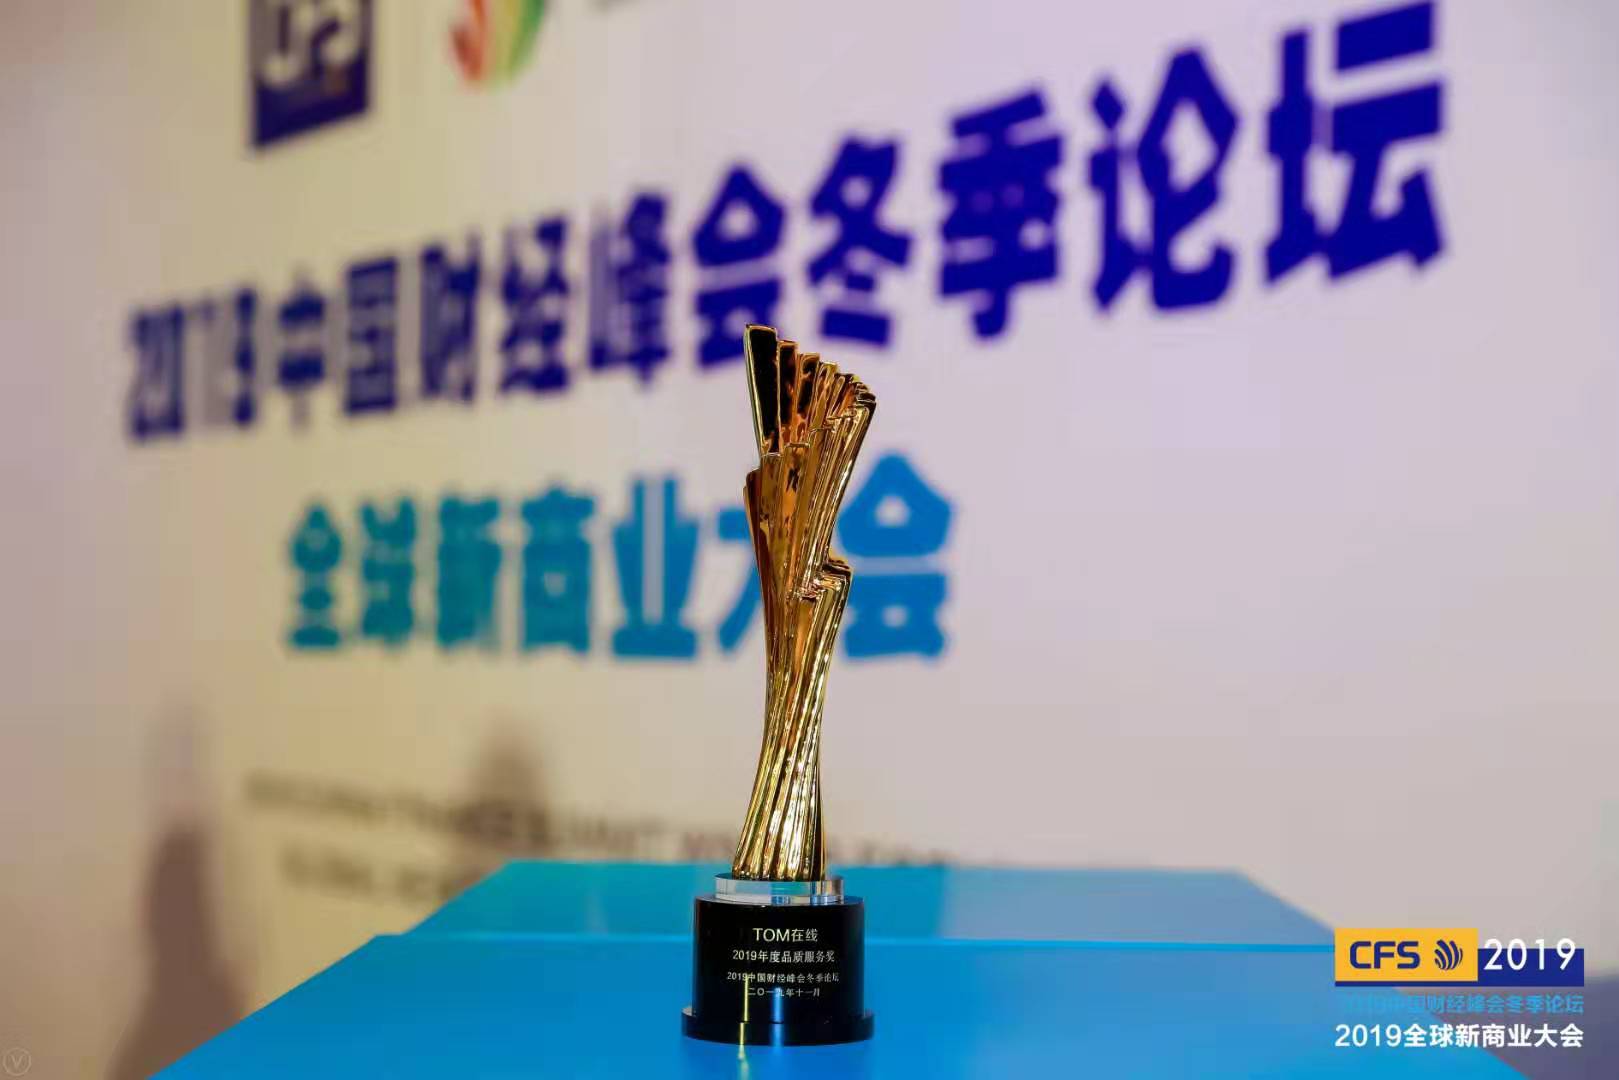 TOM在线荣获2019中国财经峰会冬季论坛“2019年度品质服务奖”